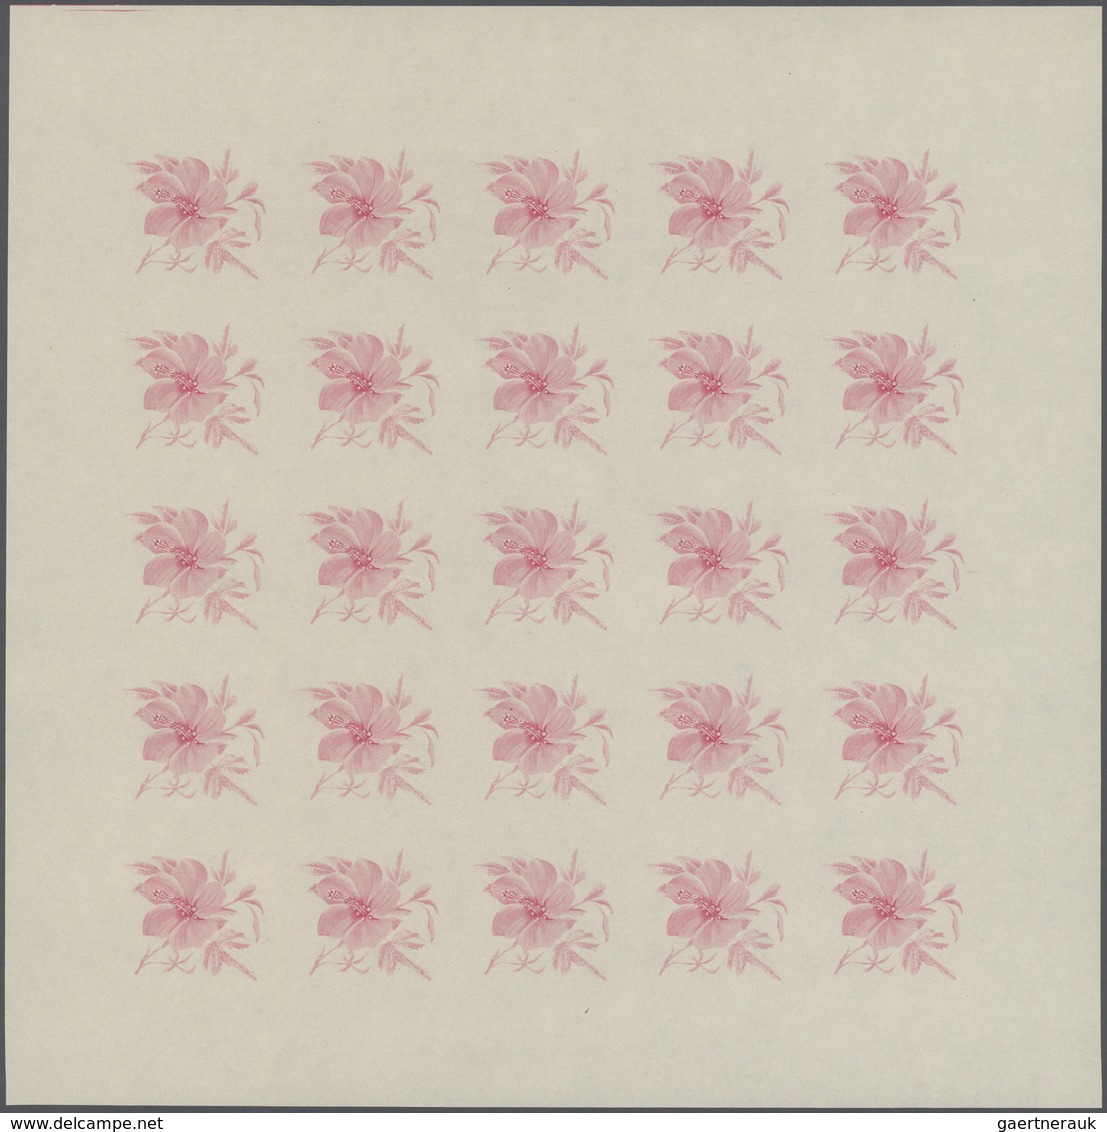 25063 Thematik: Flora, Botanik / flora, botany, bloom: 1966, Burundi. Progressive proofs set of sheets for